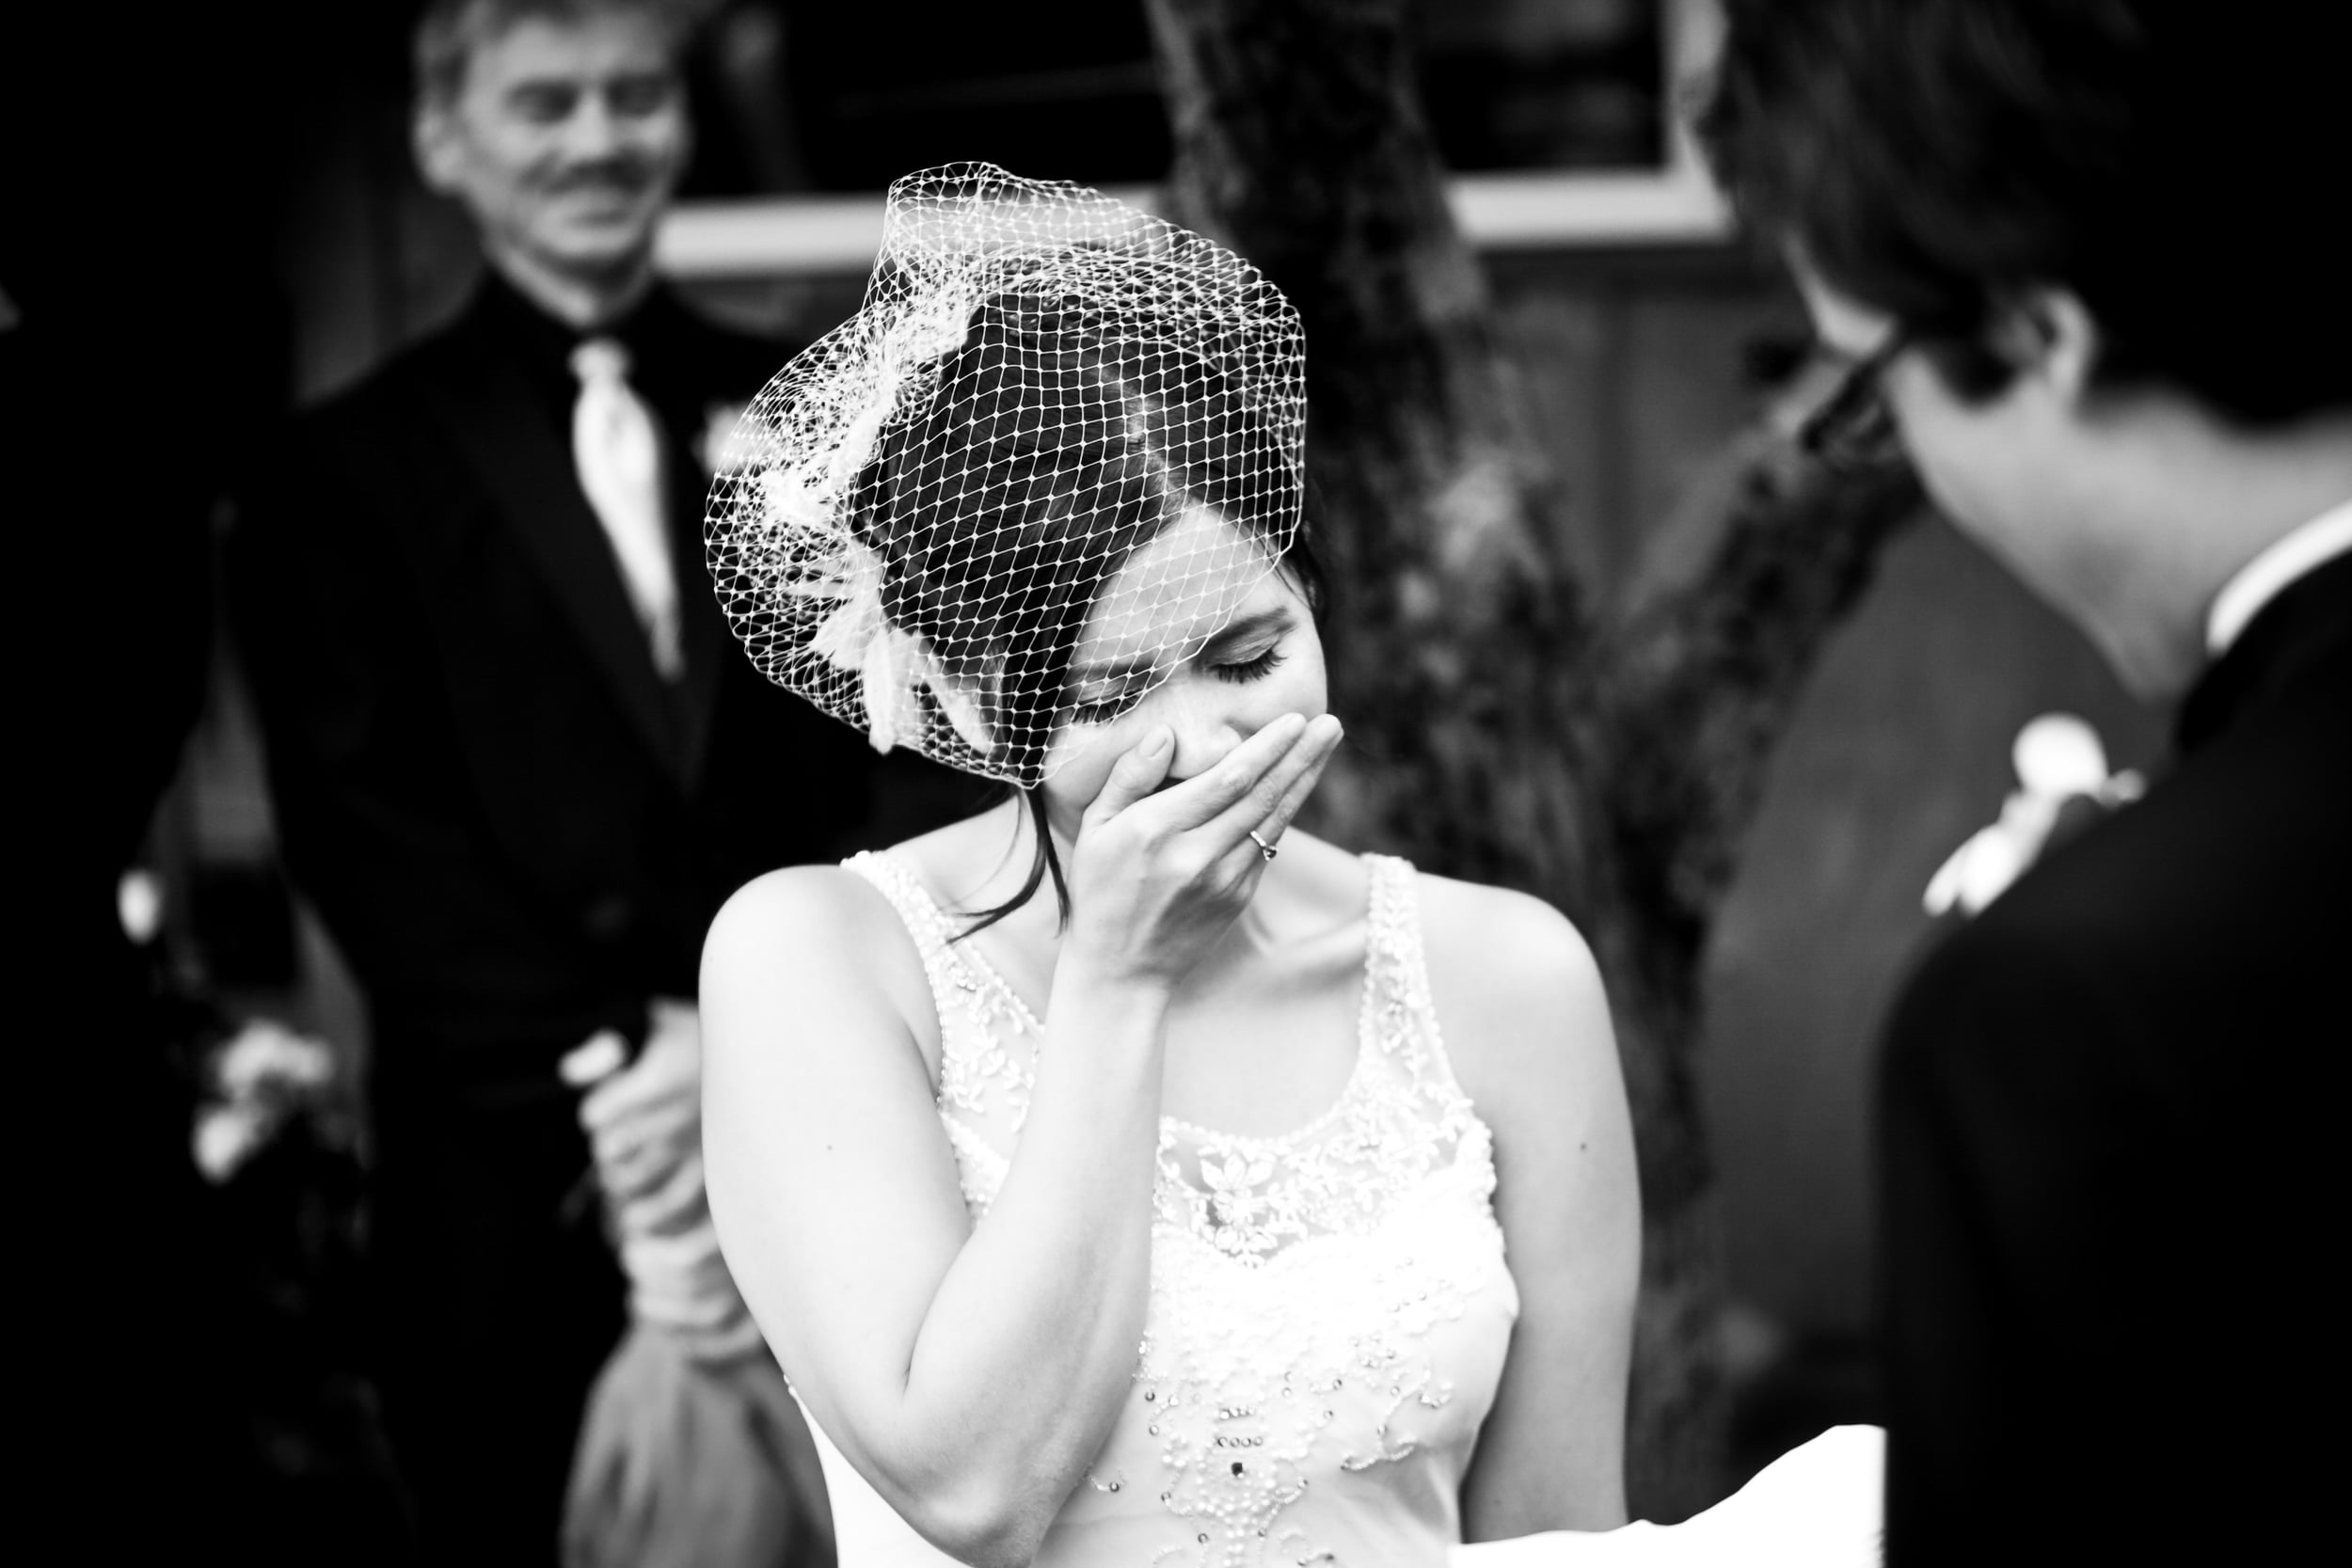 emotional bride during wedding ceremony (Copy)